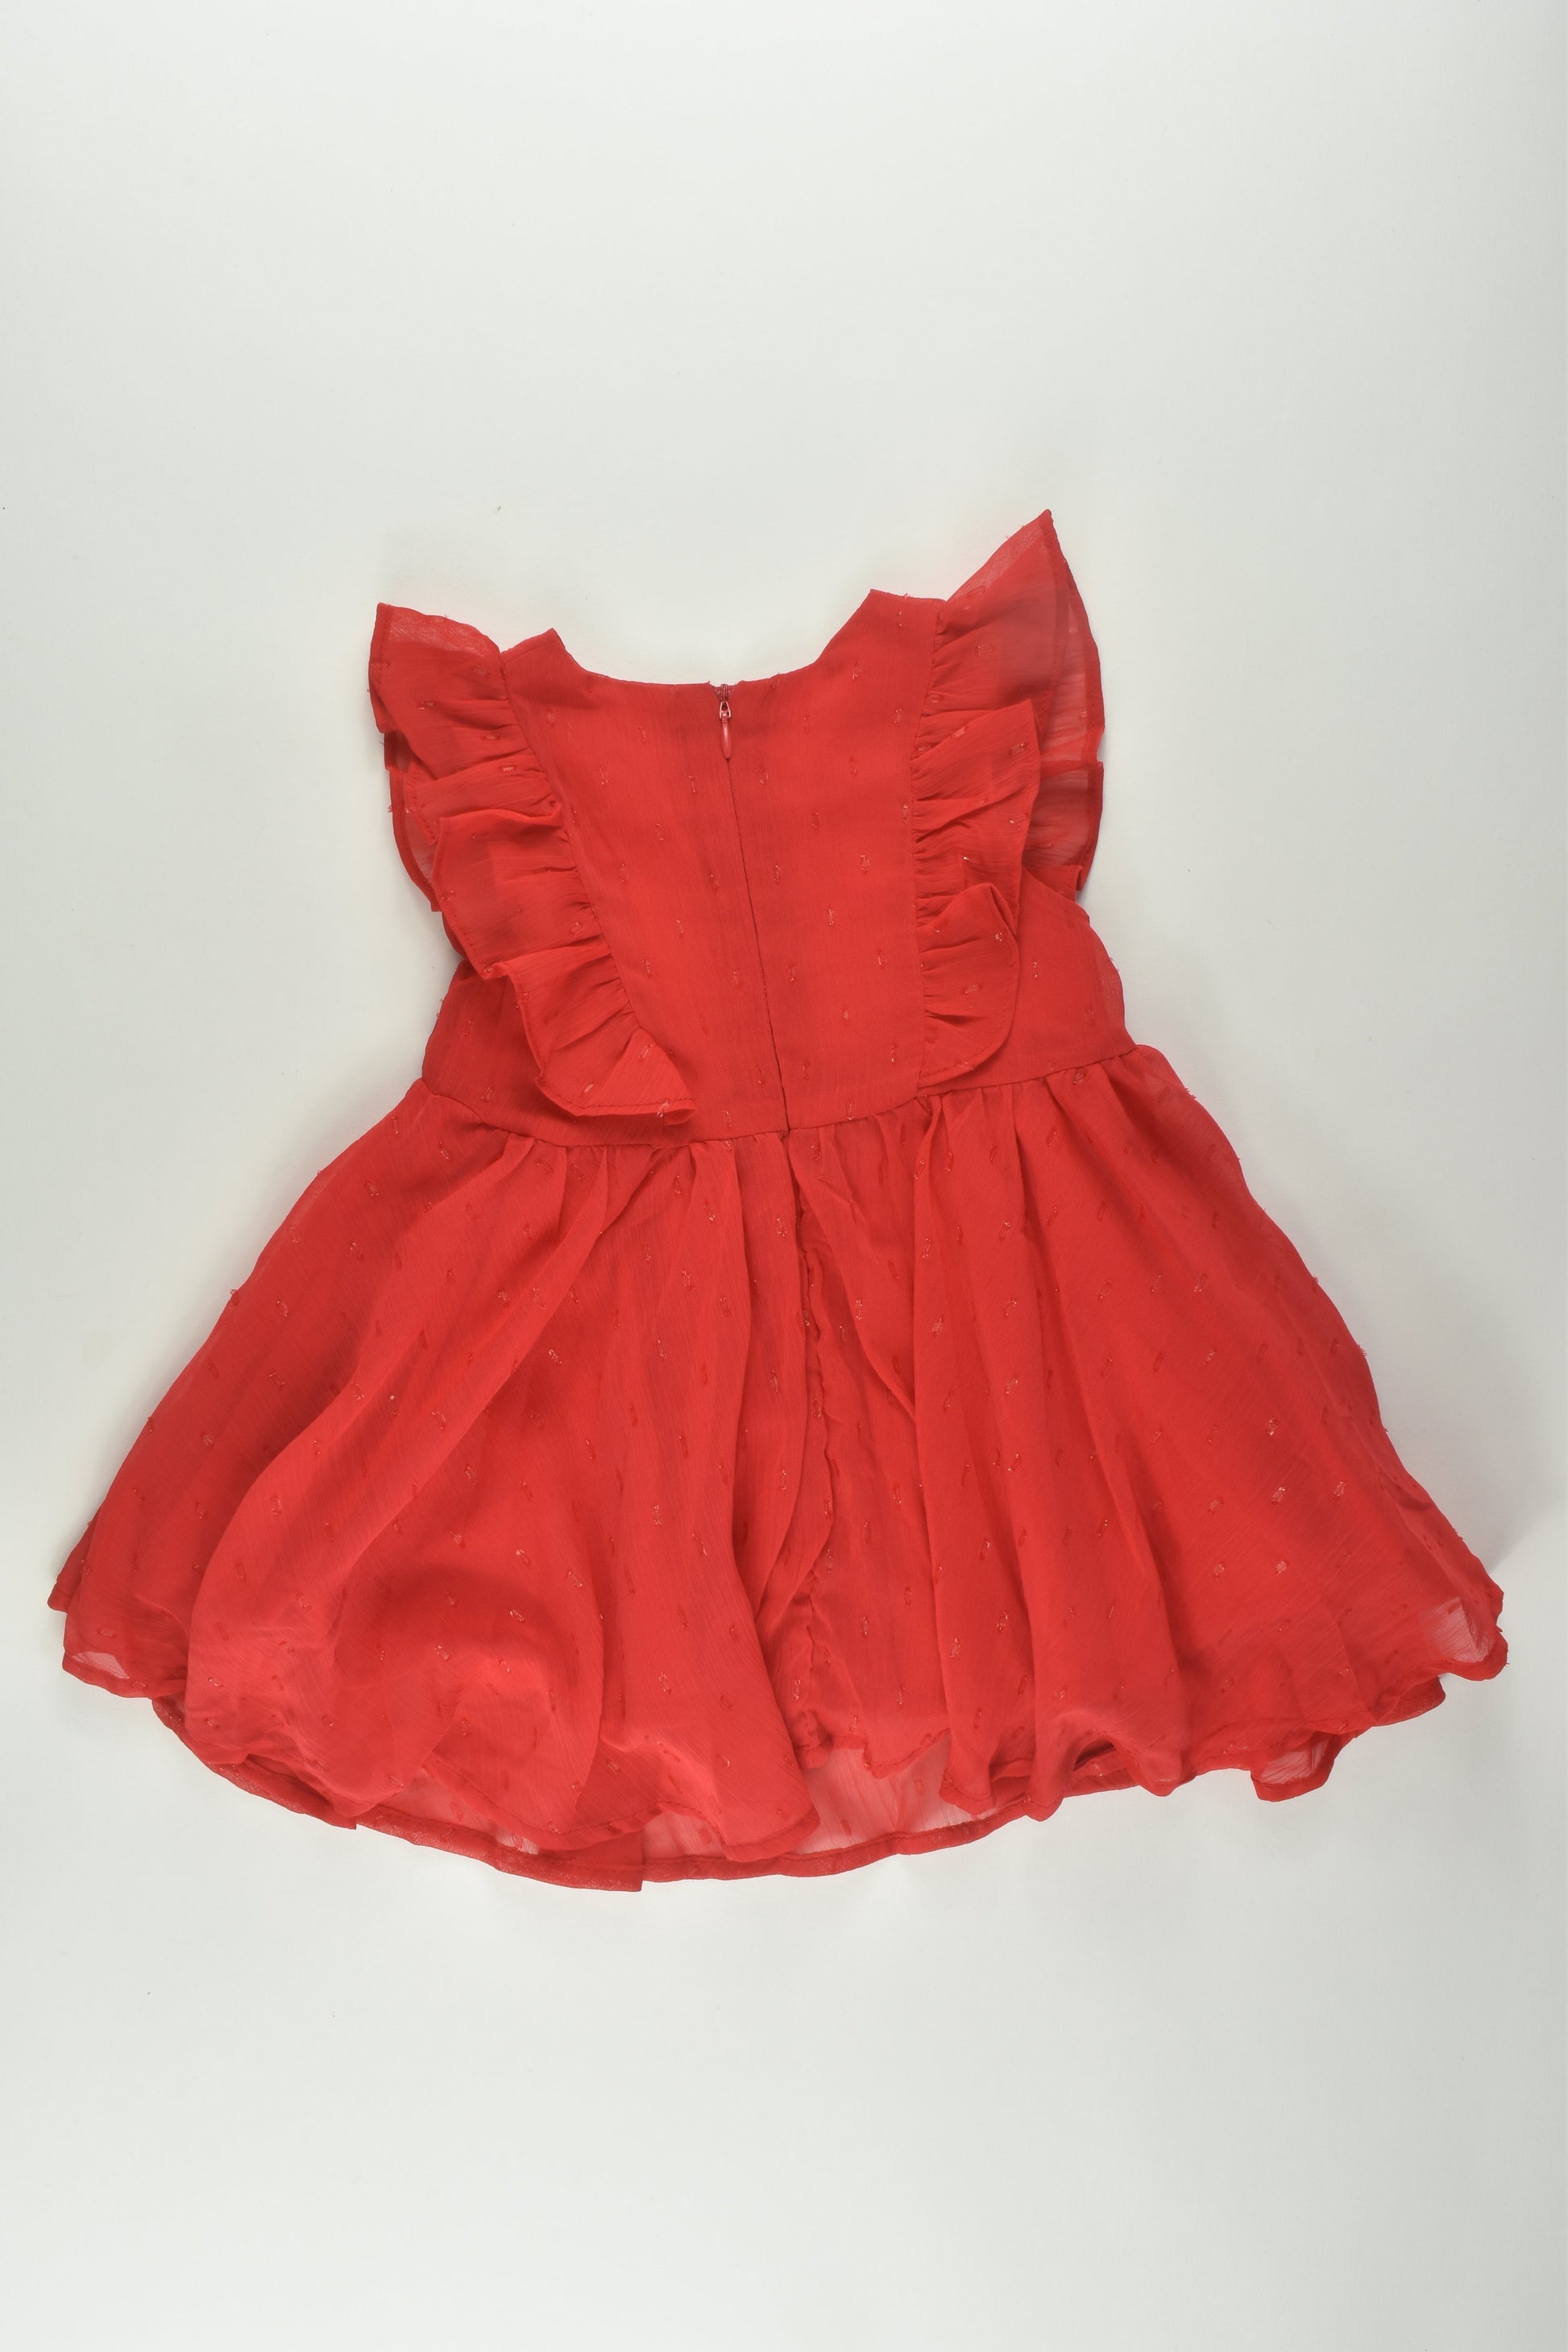 Bébé by Minihaha Size 0 Dress